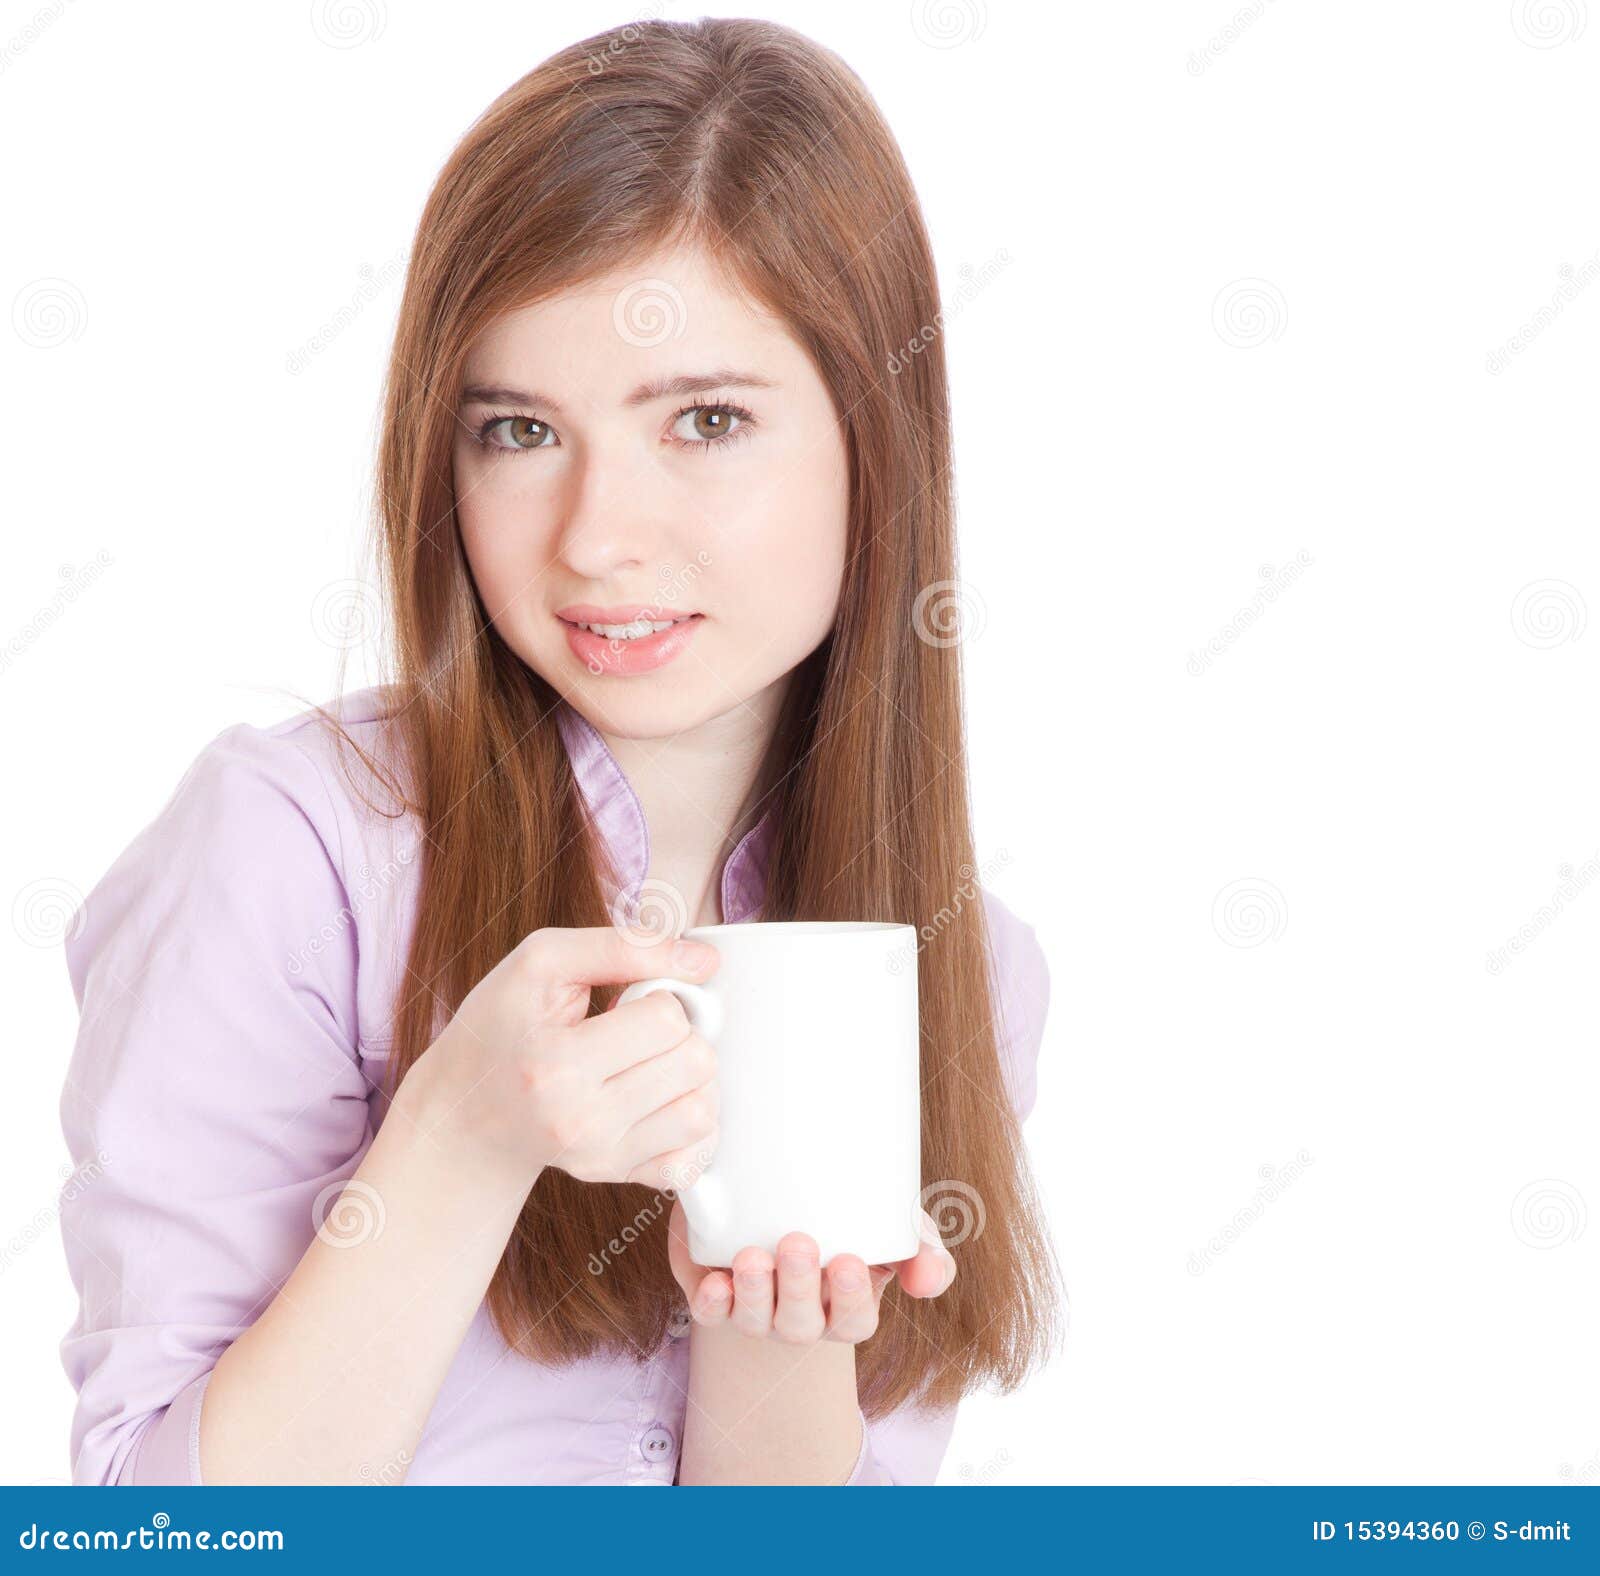 https://thumbs.dreamstime.com/z/young-girl-mug-coffee-15394360.jpg